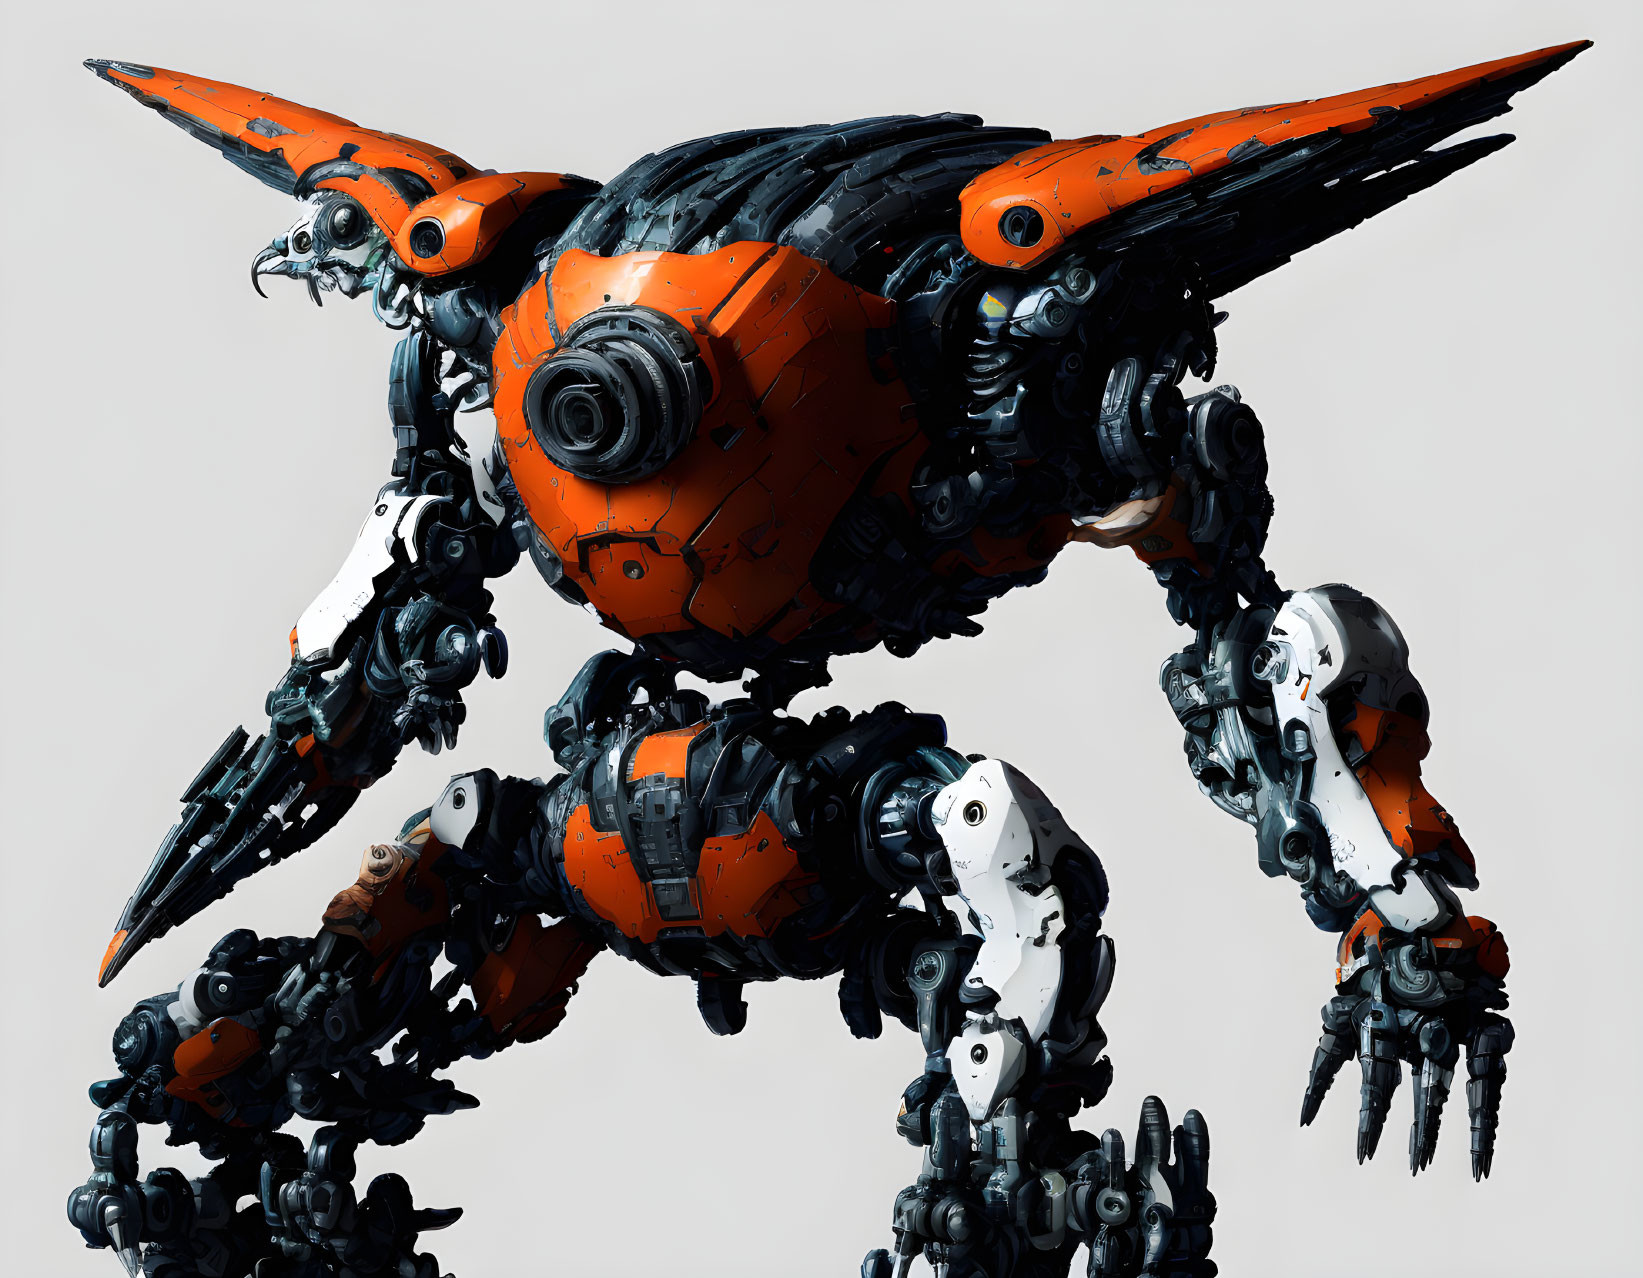 Sleek Orange and Black Robotic Bird with Intricate Details